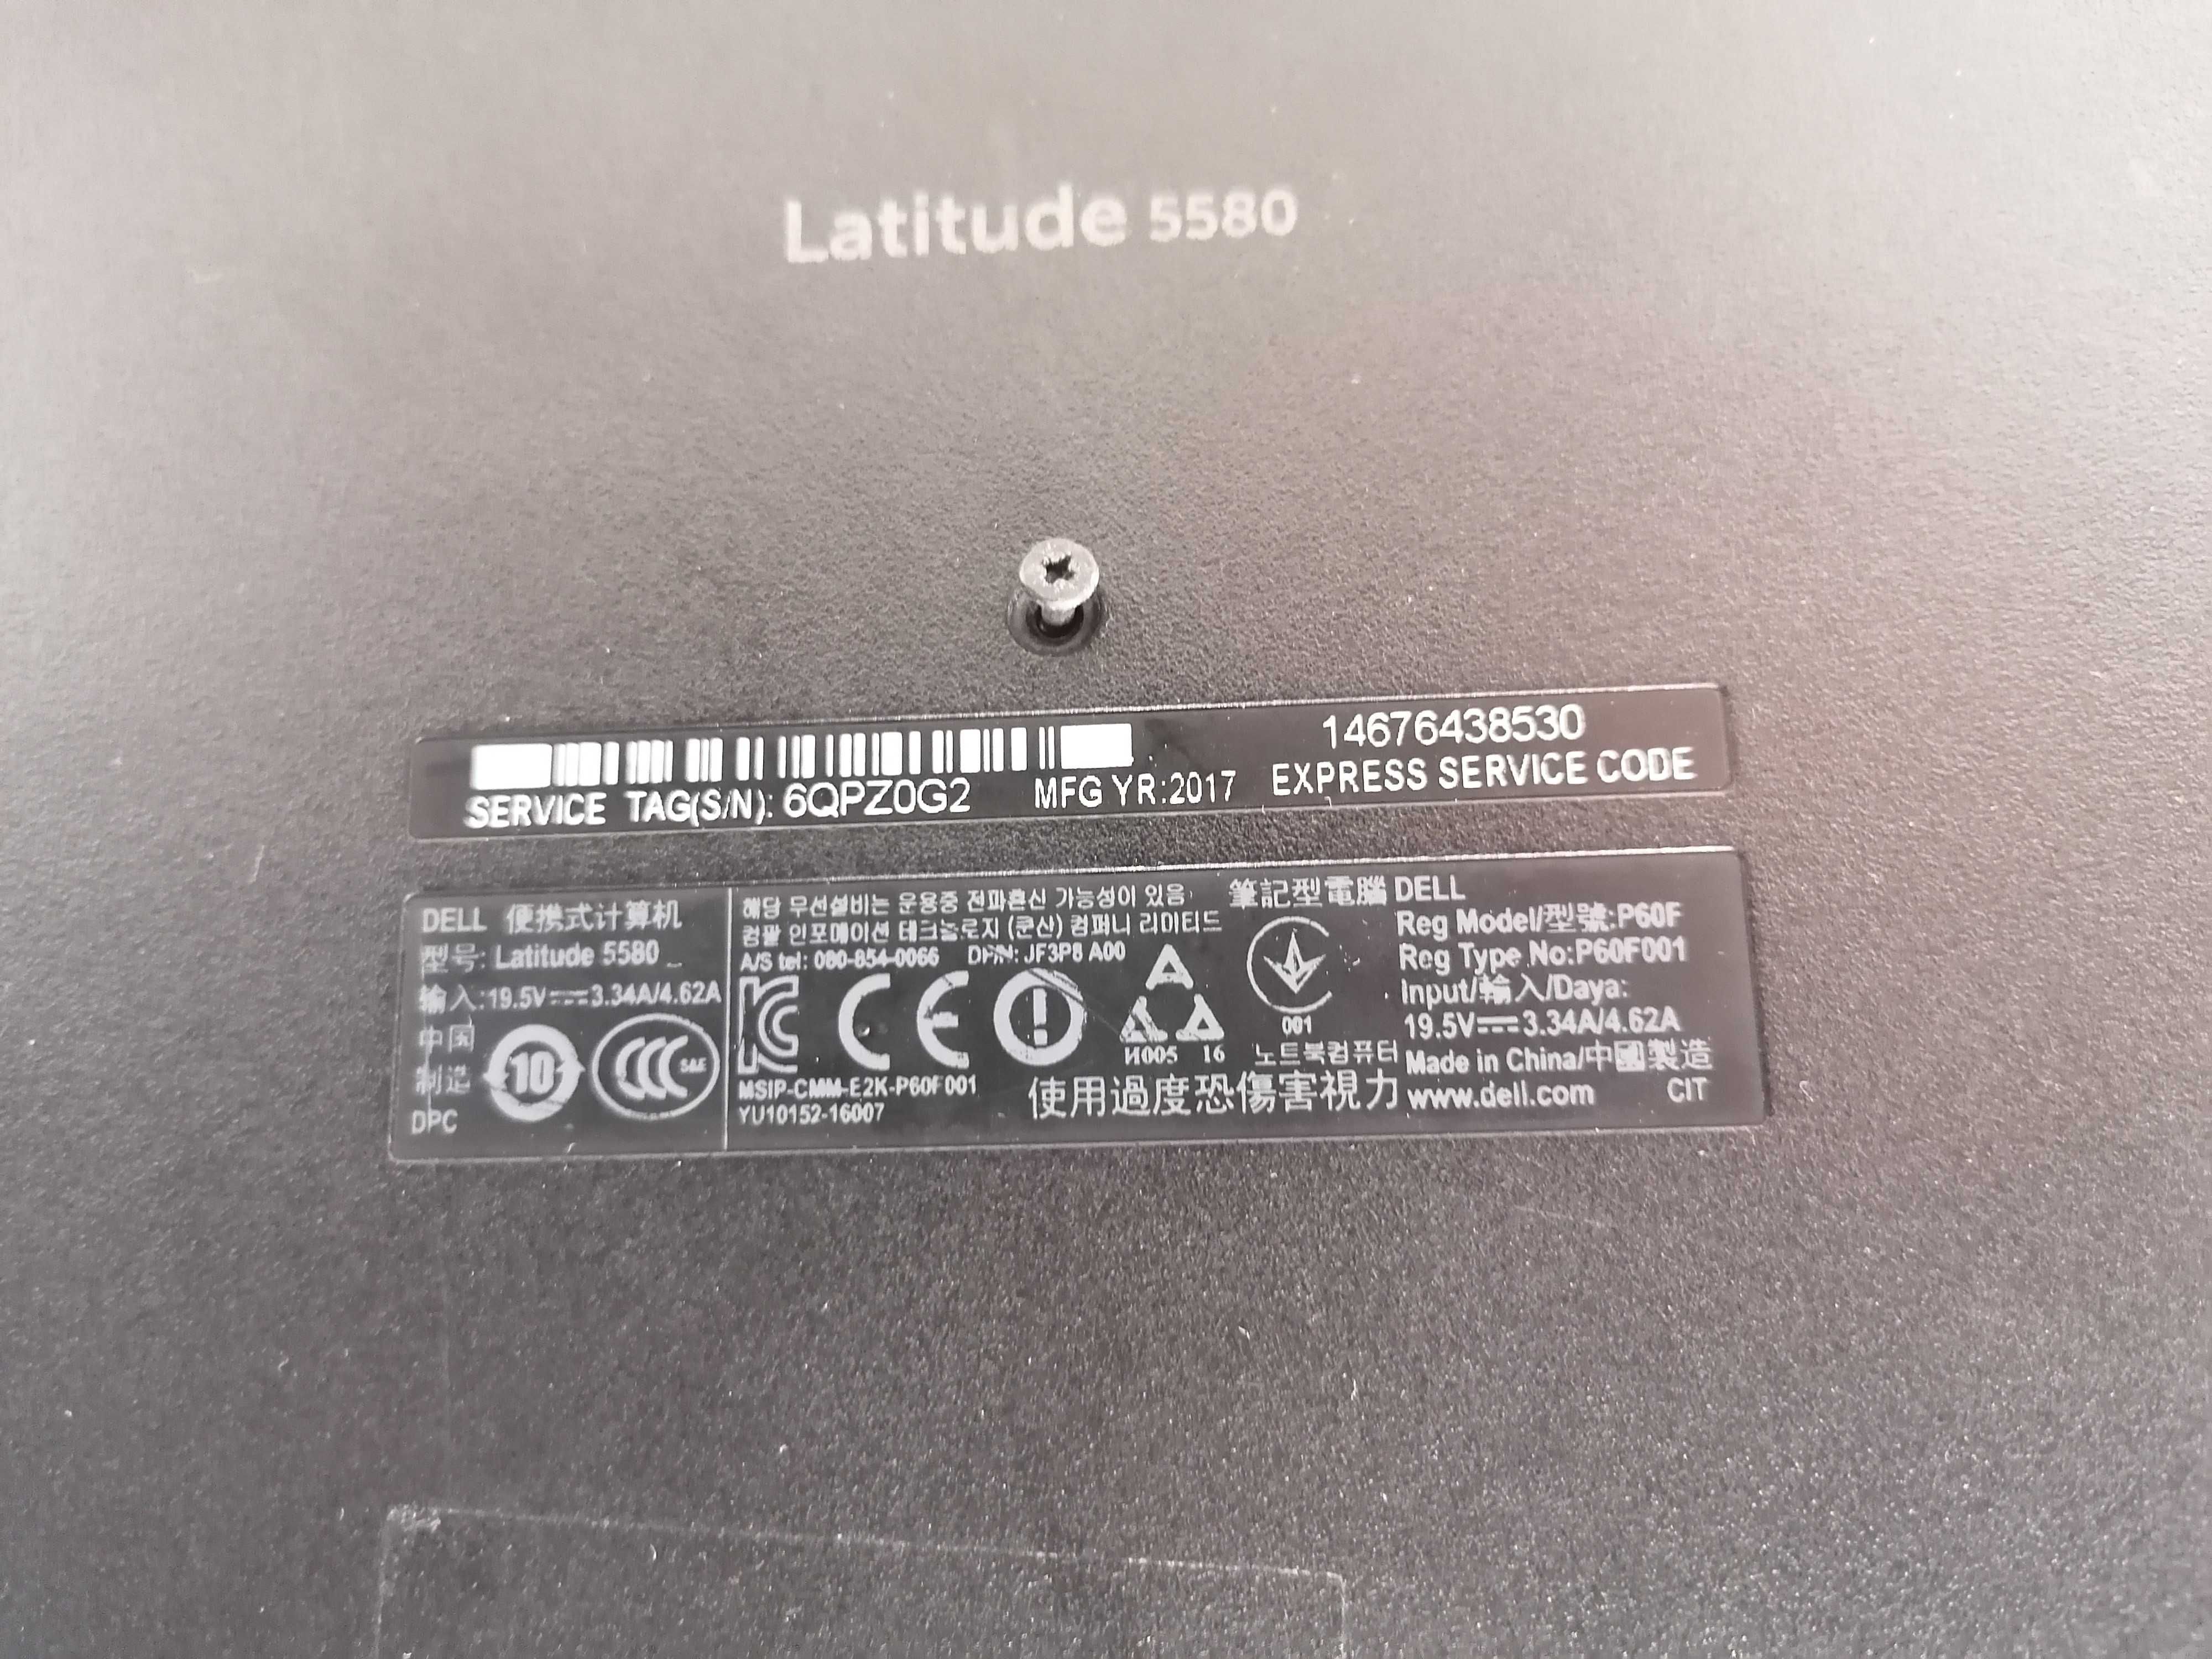 Dell Latitude 5580-i7-7600u-2,80Ghz,NVidia930MX,ram 16GB,SSD,15,6"disp